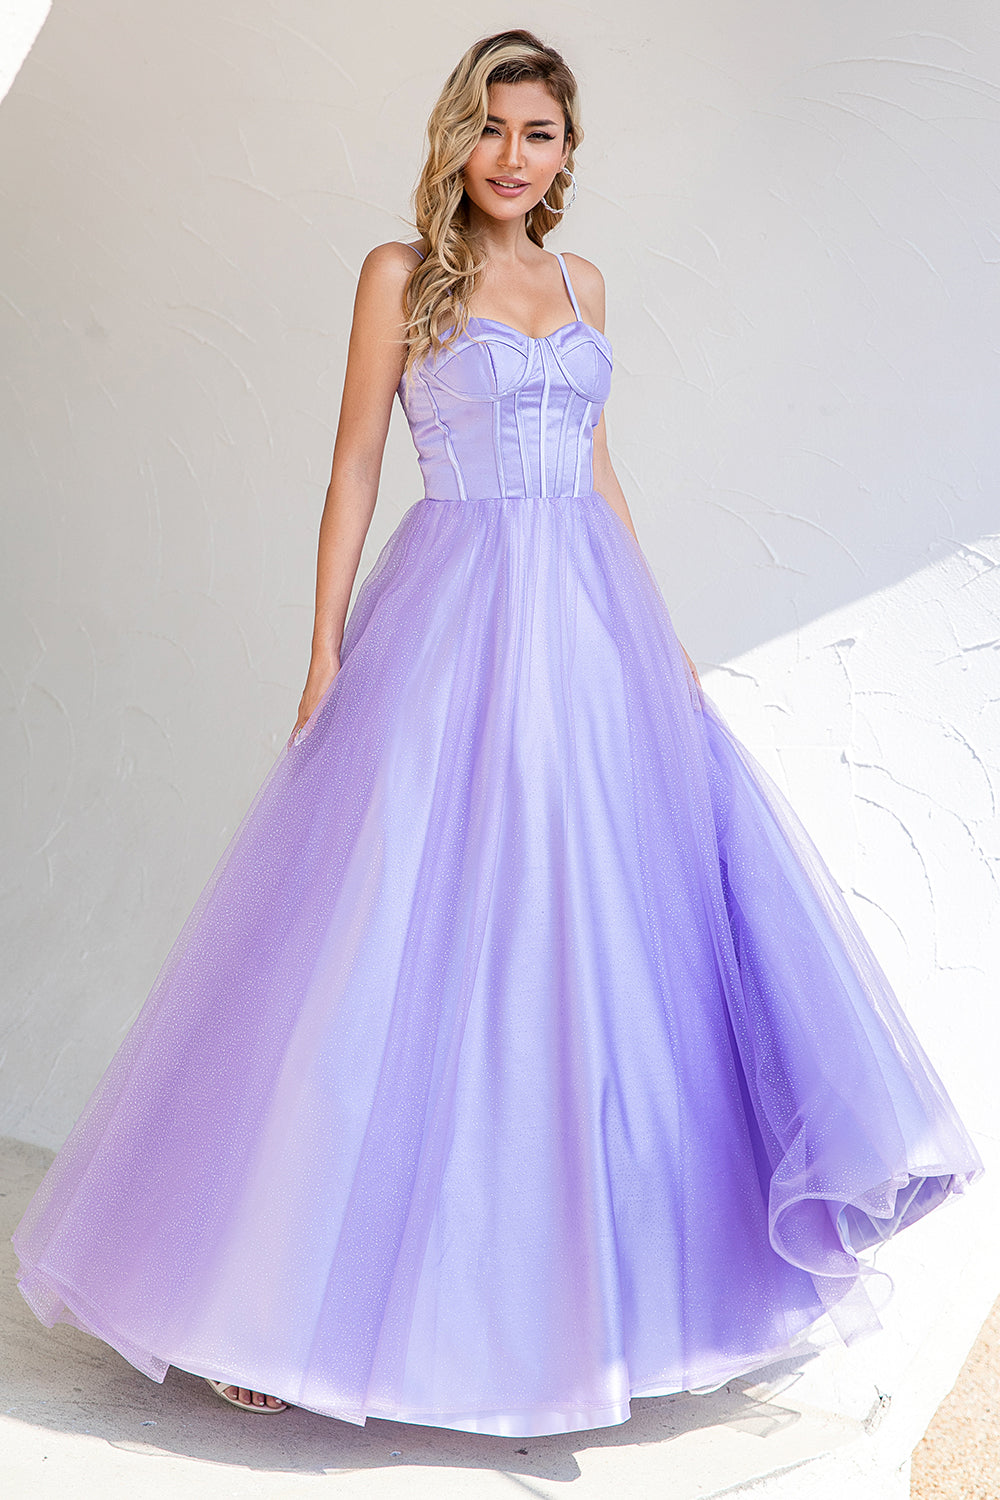 Zapakasa Women Prom Dress Purple Tulle A-Line Sleeveless Formal Dress, Purple / US12